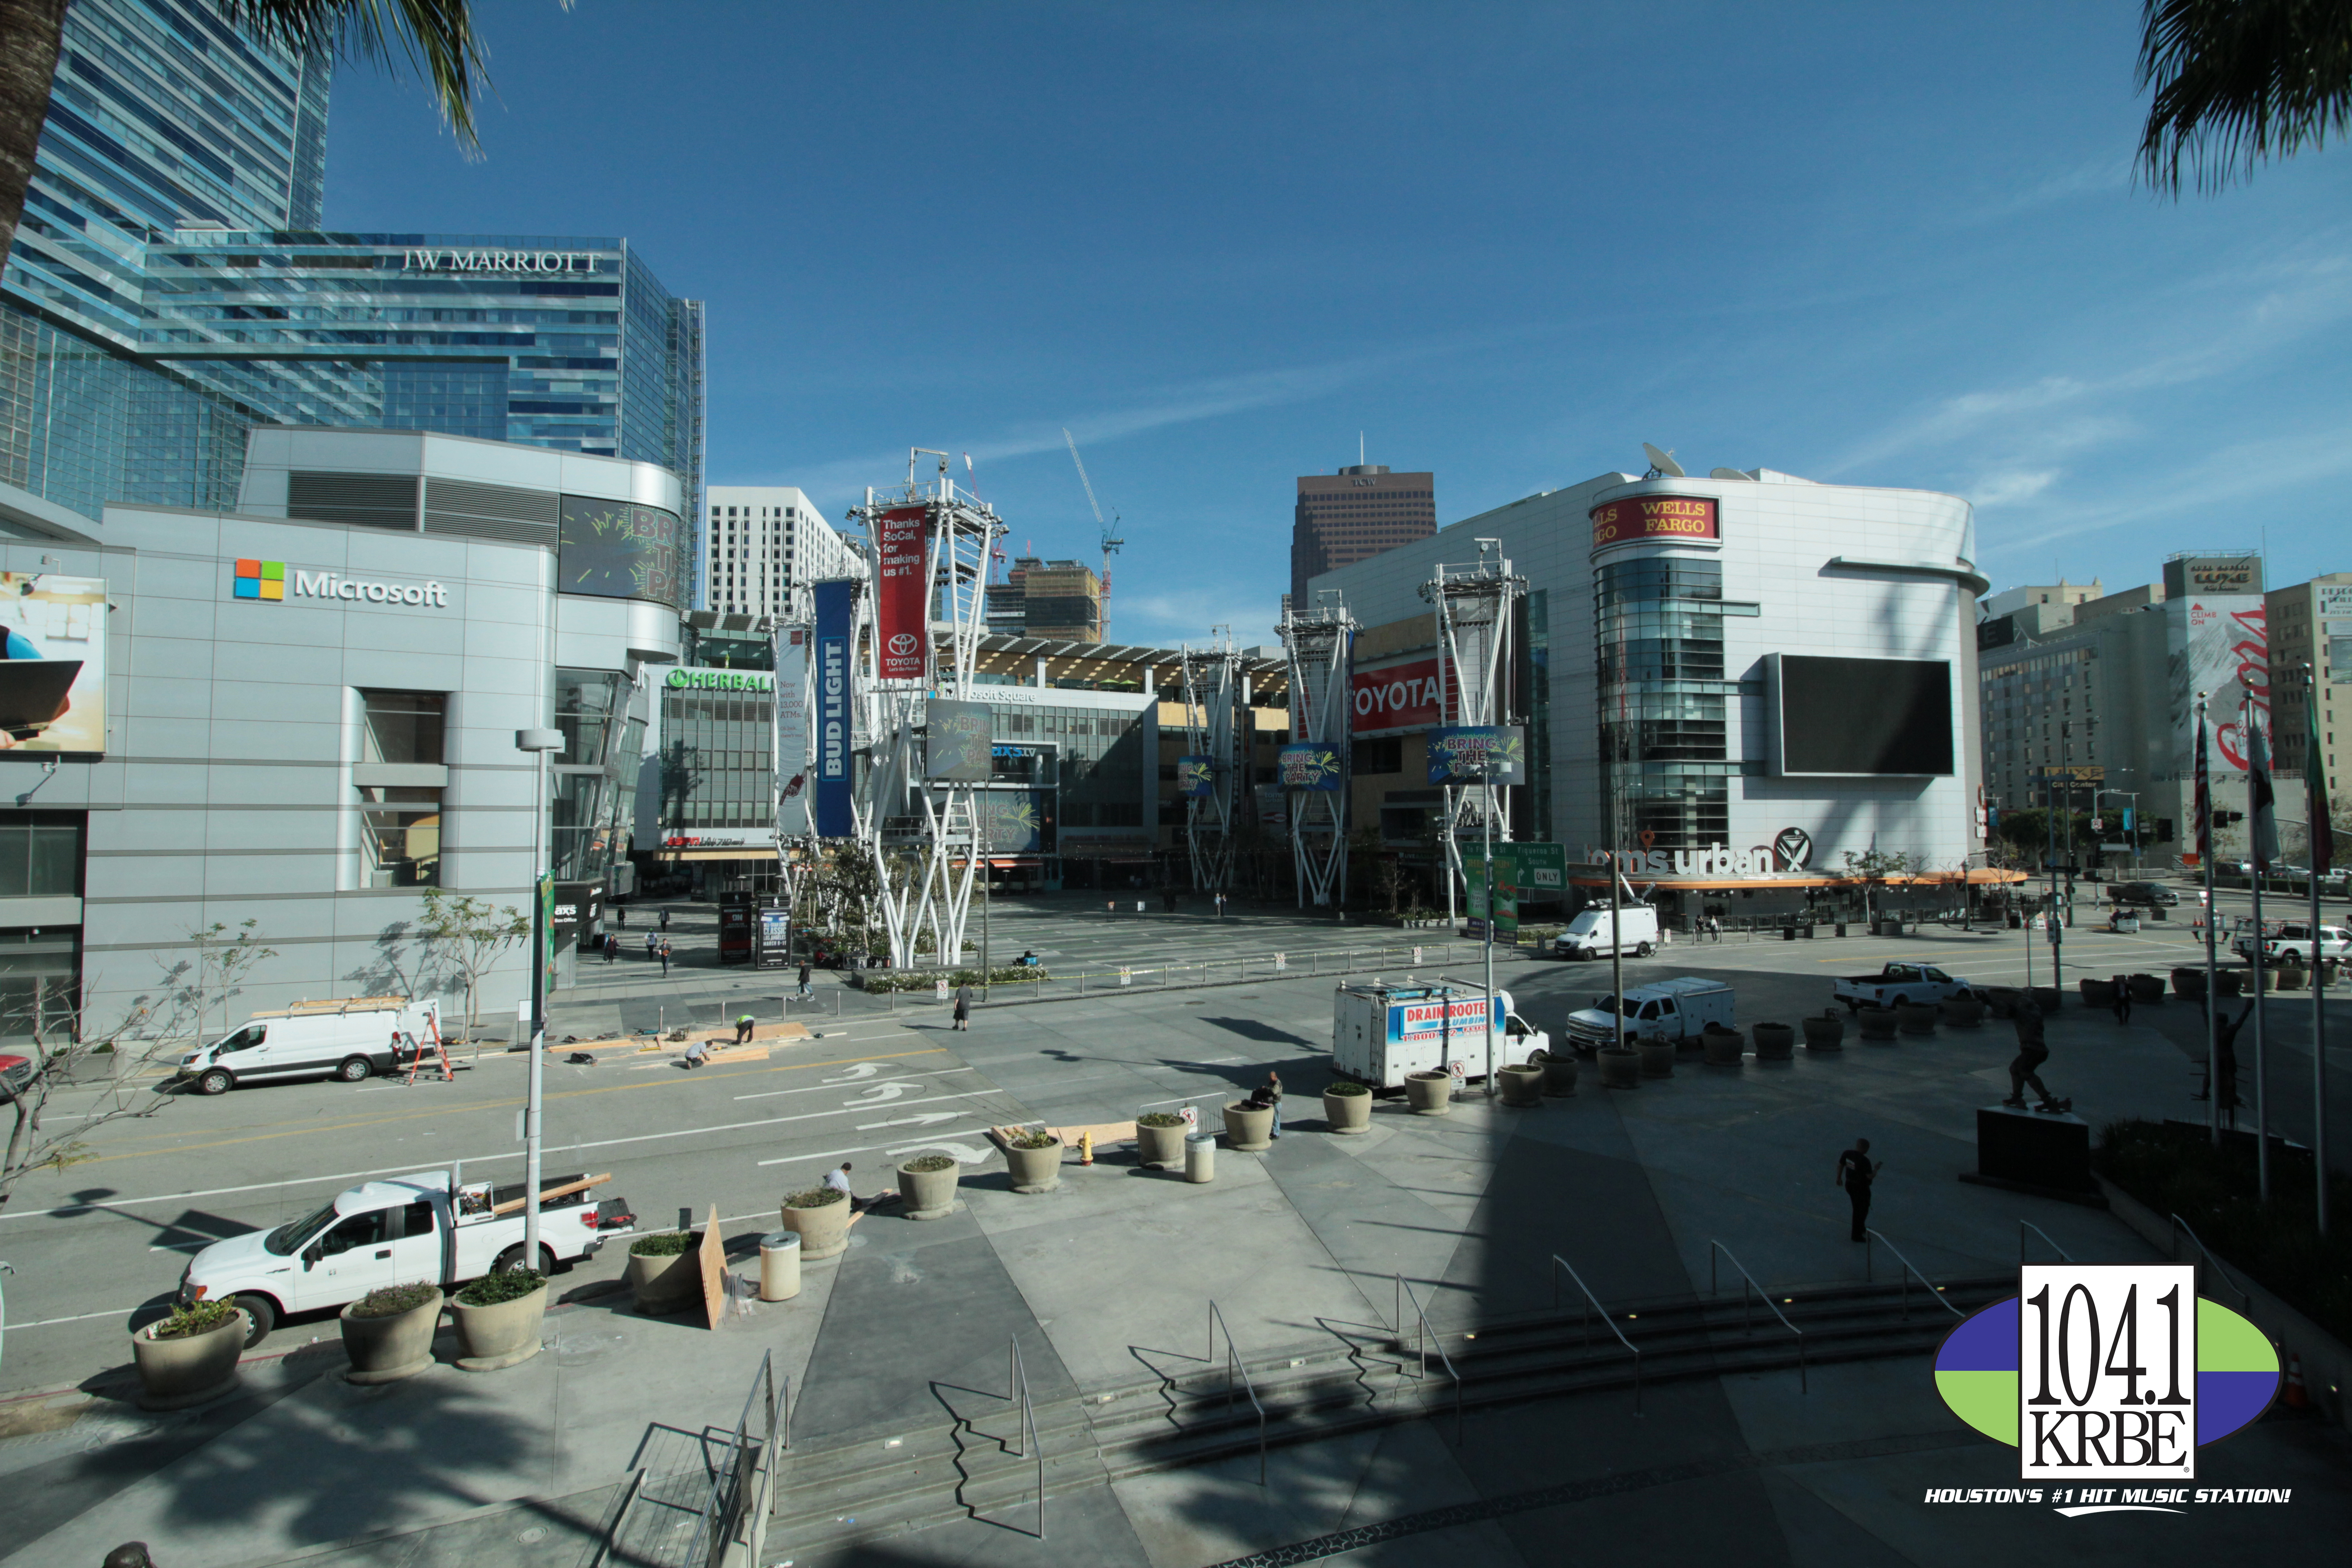 PHOTO: Microsoft Square, the home of L.A. Live. Photo courtesy of E.J. Santillan and 104.1 KRBE.